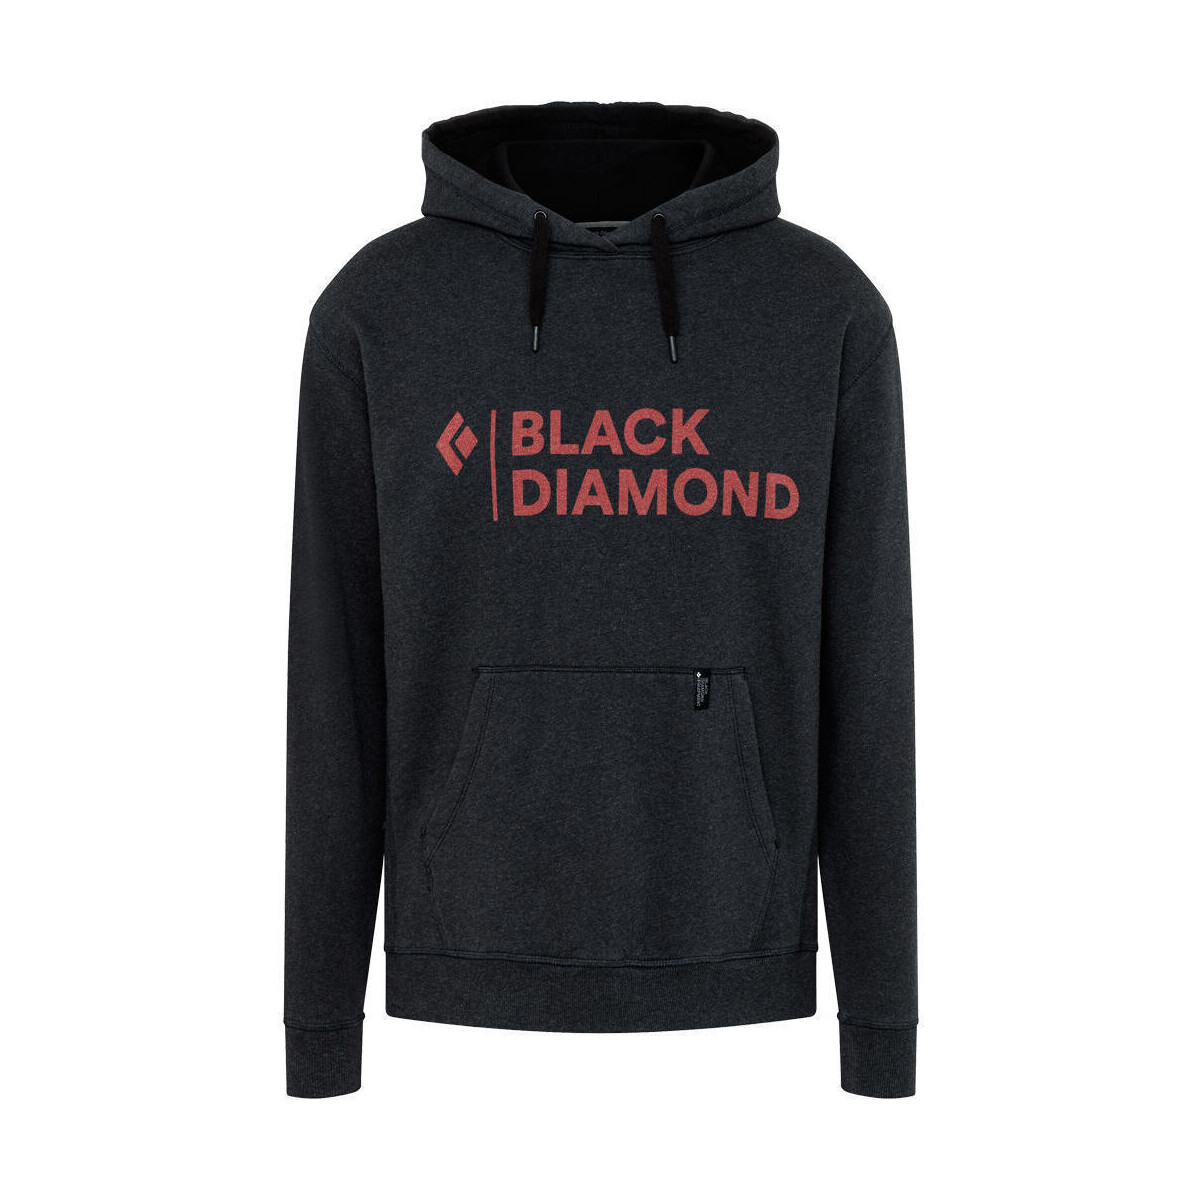 Vêtements Homme Pulls Black Diamond M STACKED LOGO HOODY NE Multicolore